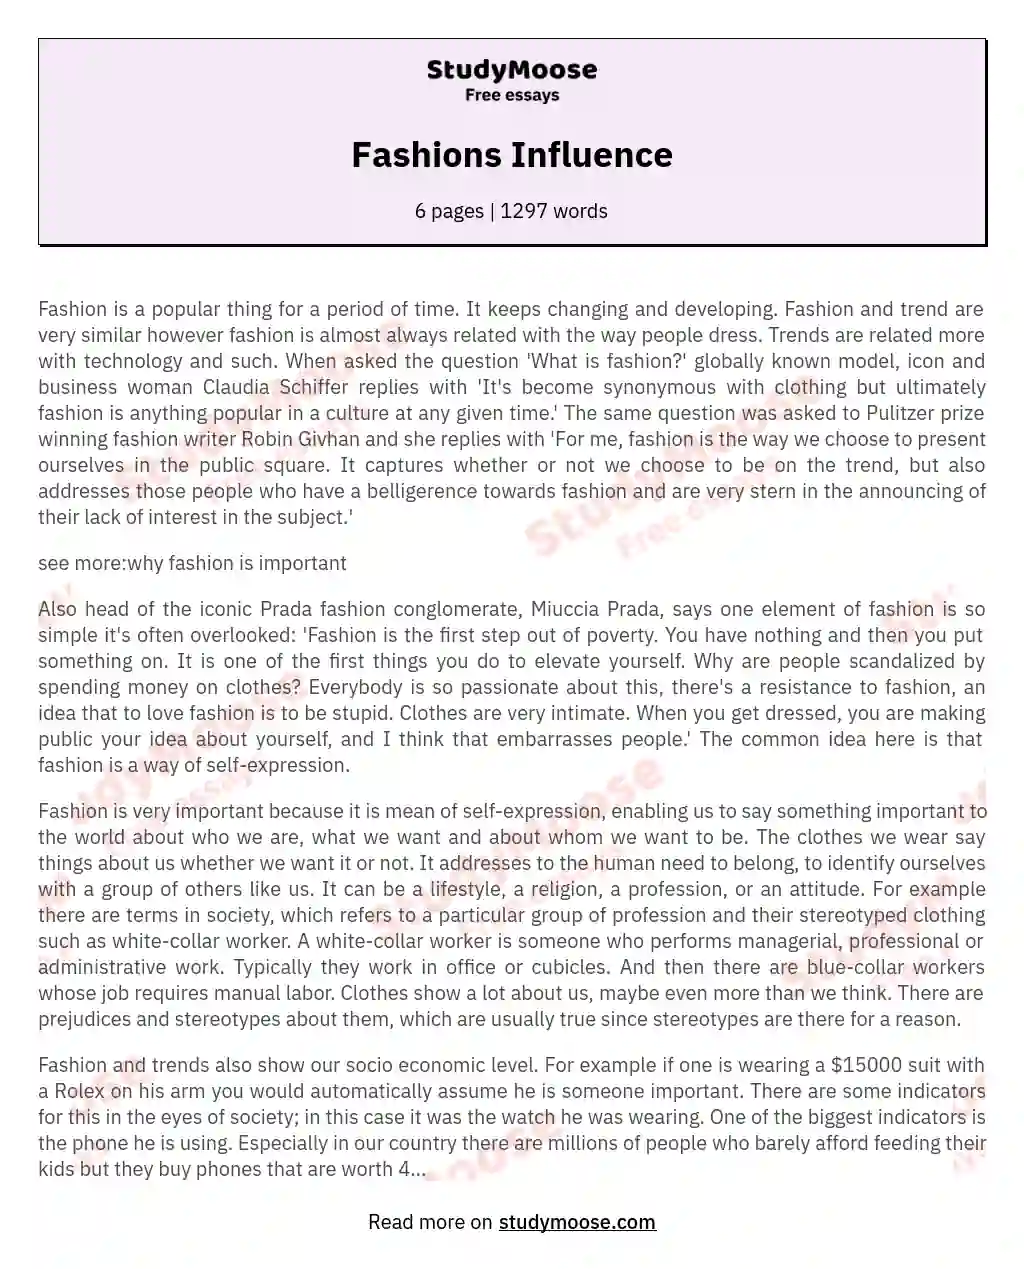 Fashions Influence essay